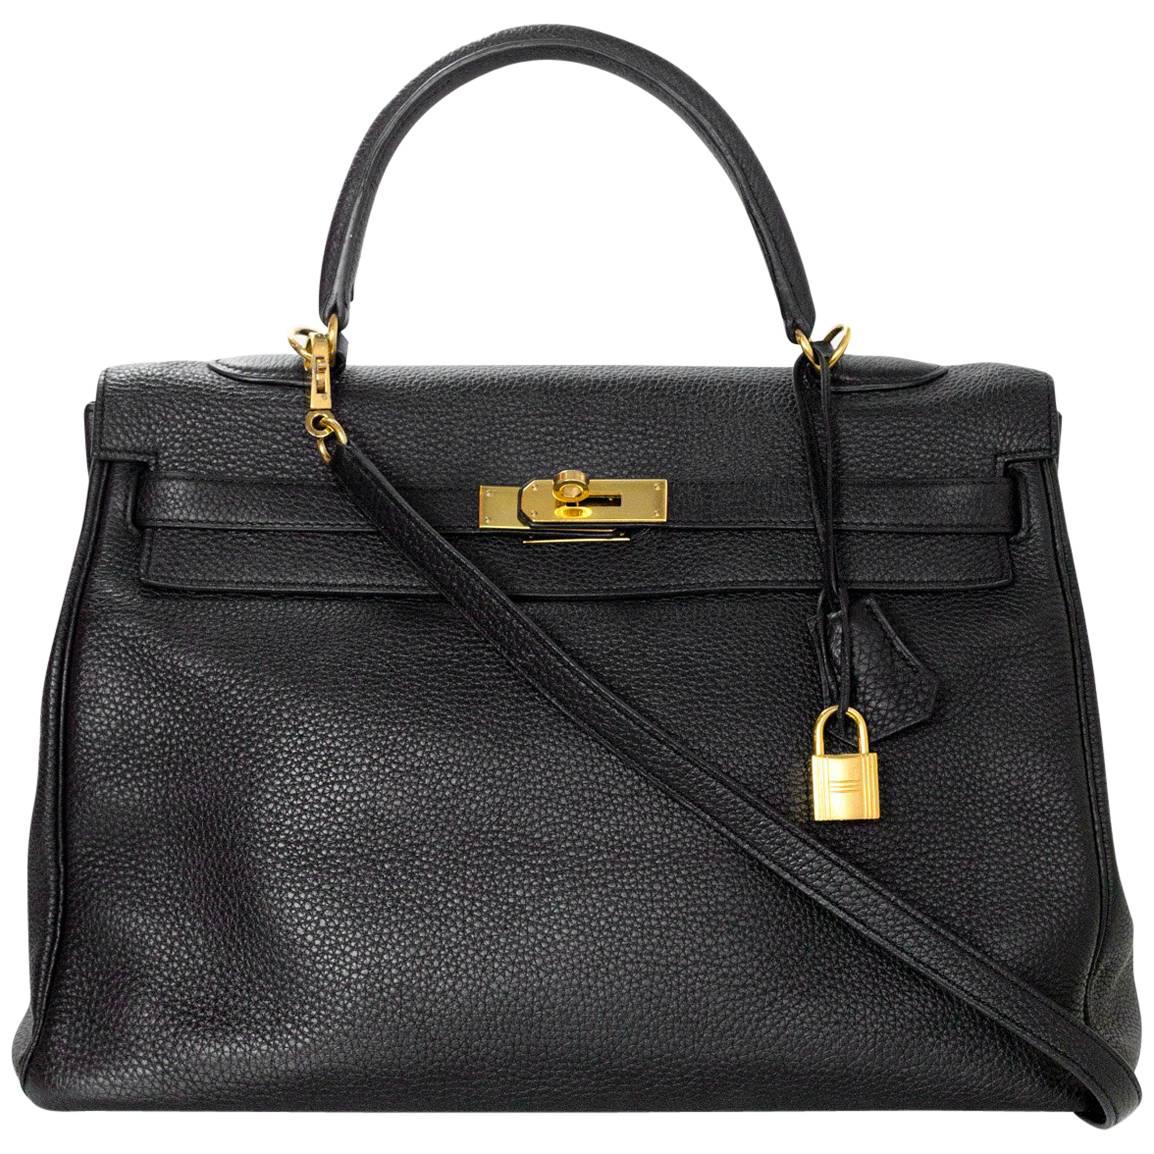 Hermes Black Togo Leather 35cm Retourne Kelly Bag GHW w/ Receipt